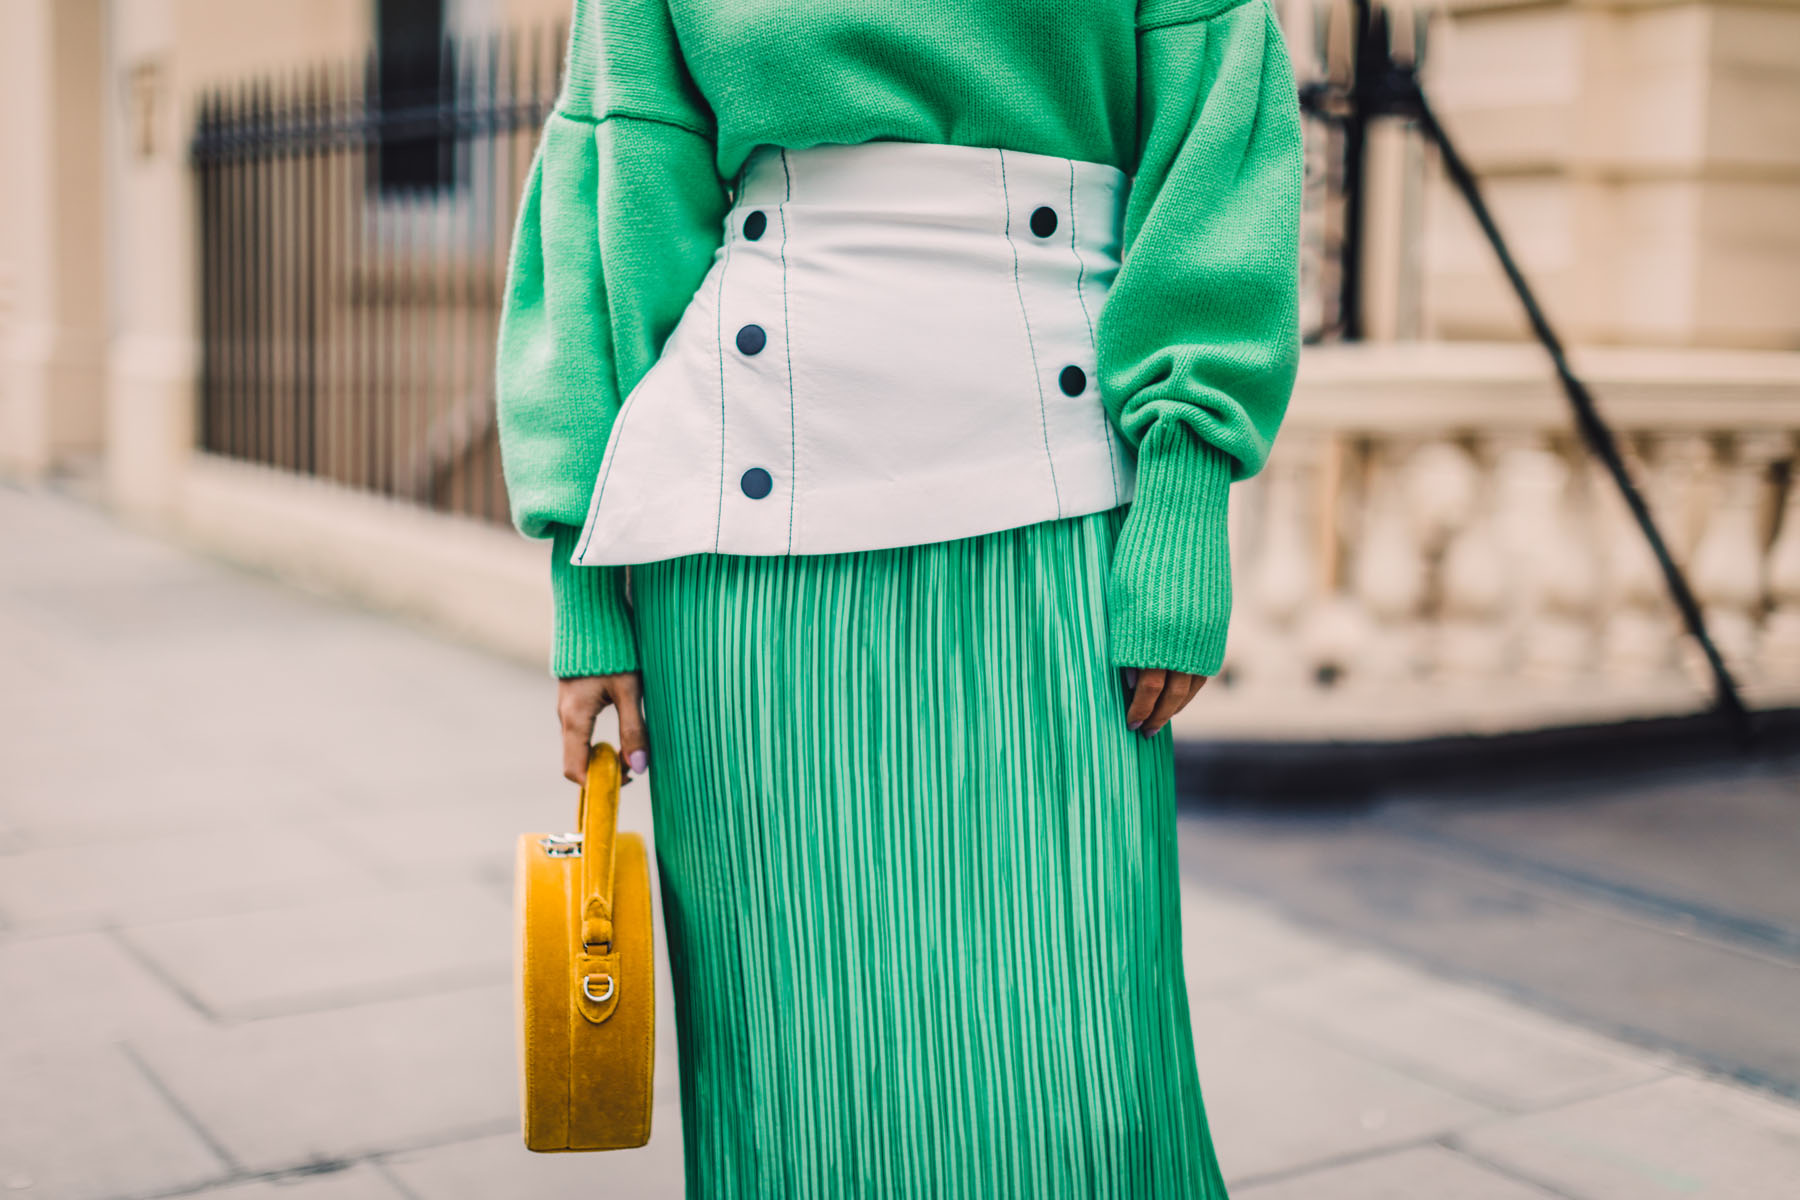 London Fashion Week Recap - green pleated dress, white corset belt, yellow handbag, white attico pumps // Notjessfashion.com